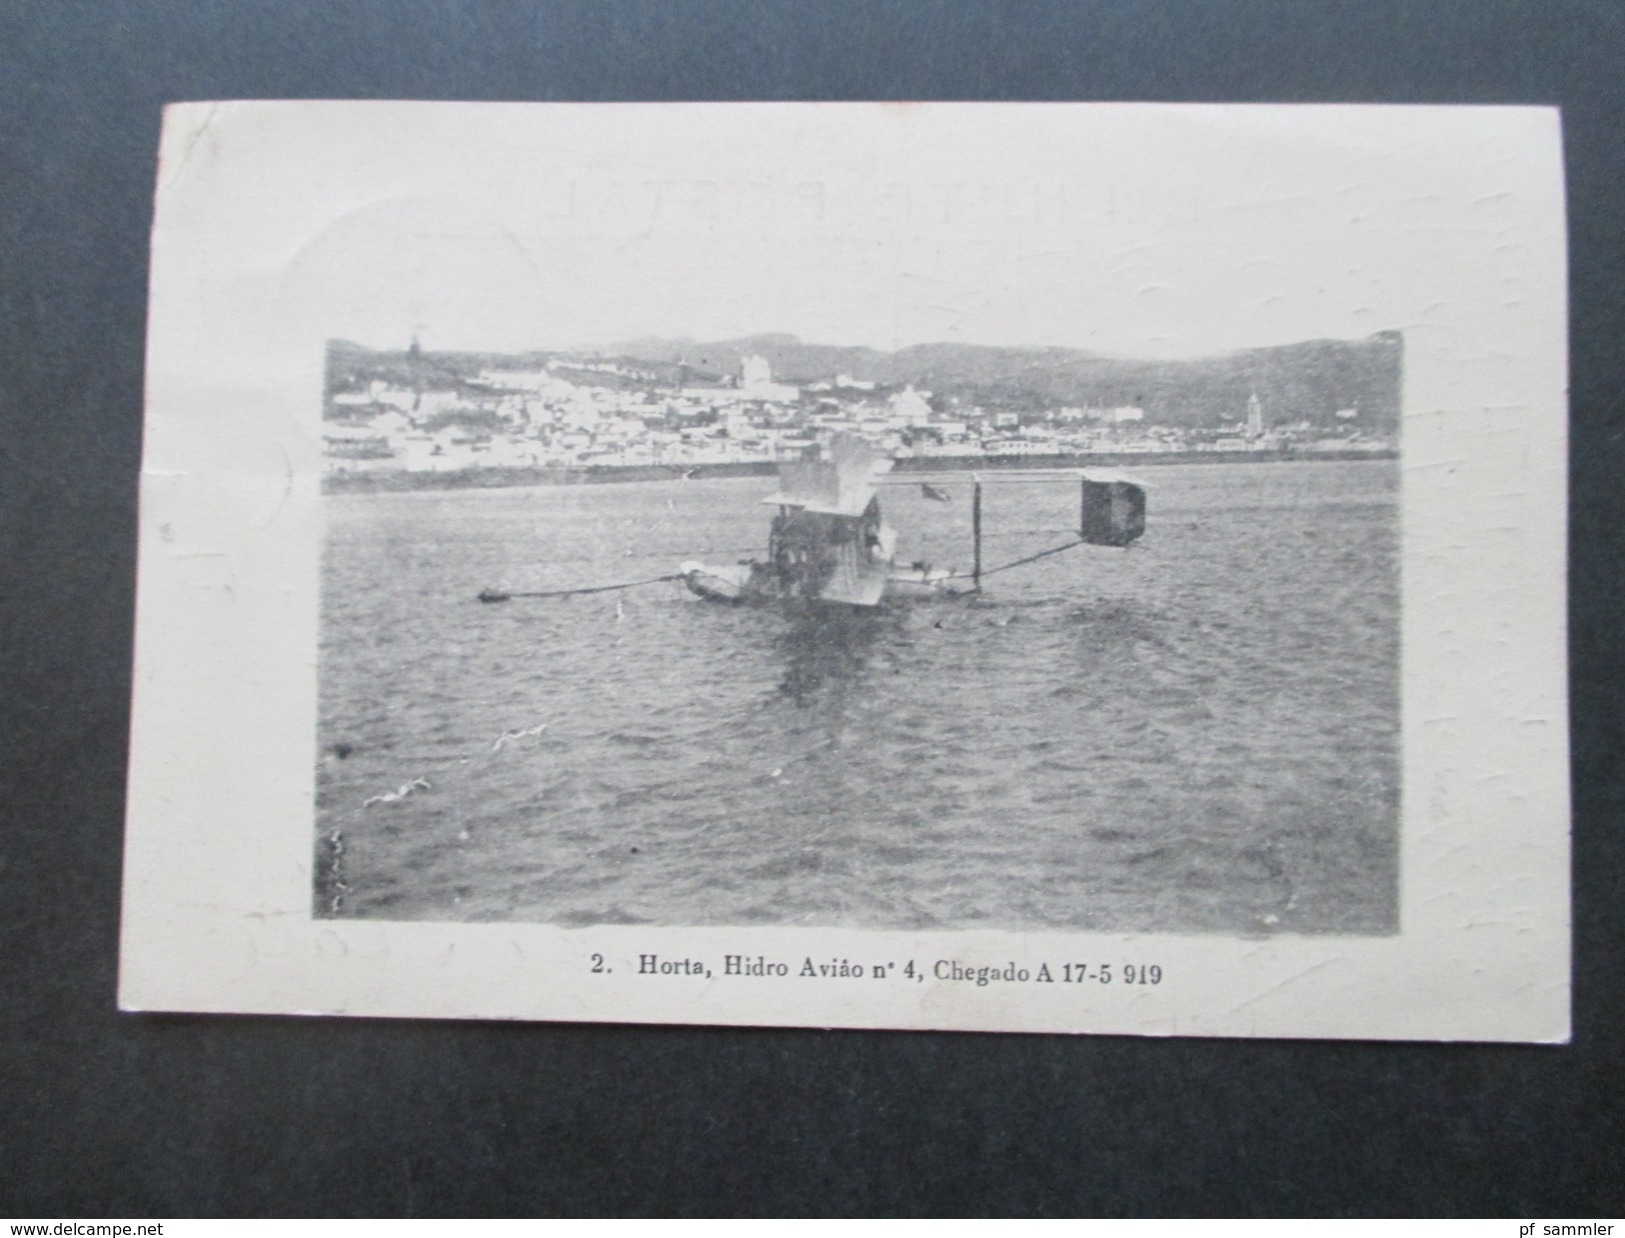 AK/Echtfoto Wasserflugzeug. Acores / Azoren 1910/20er Jahre!Nach Zoppot Danzig. Horta, Hidro Aviao N4 Chegado A 17-5 919 - 1919-1938: Between Wars